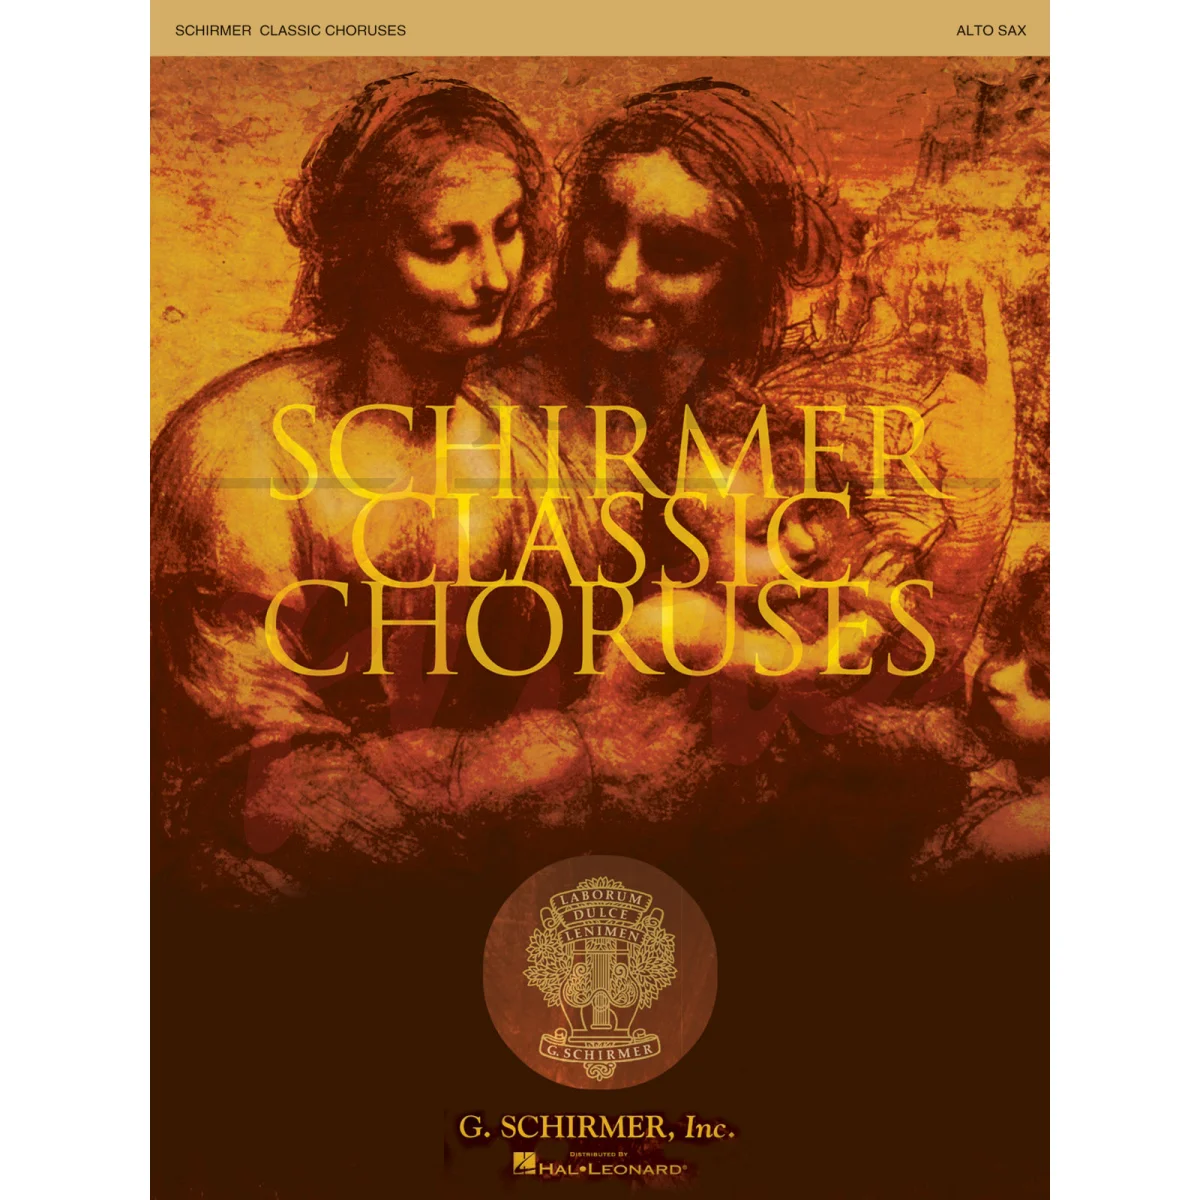 Schirmer Classic Choruses for Alto Saxophone